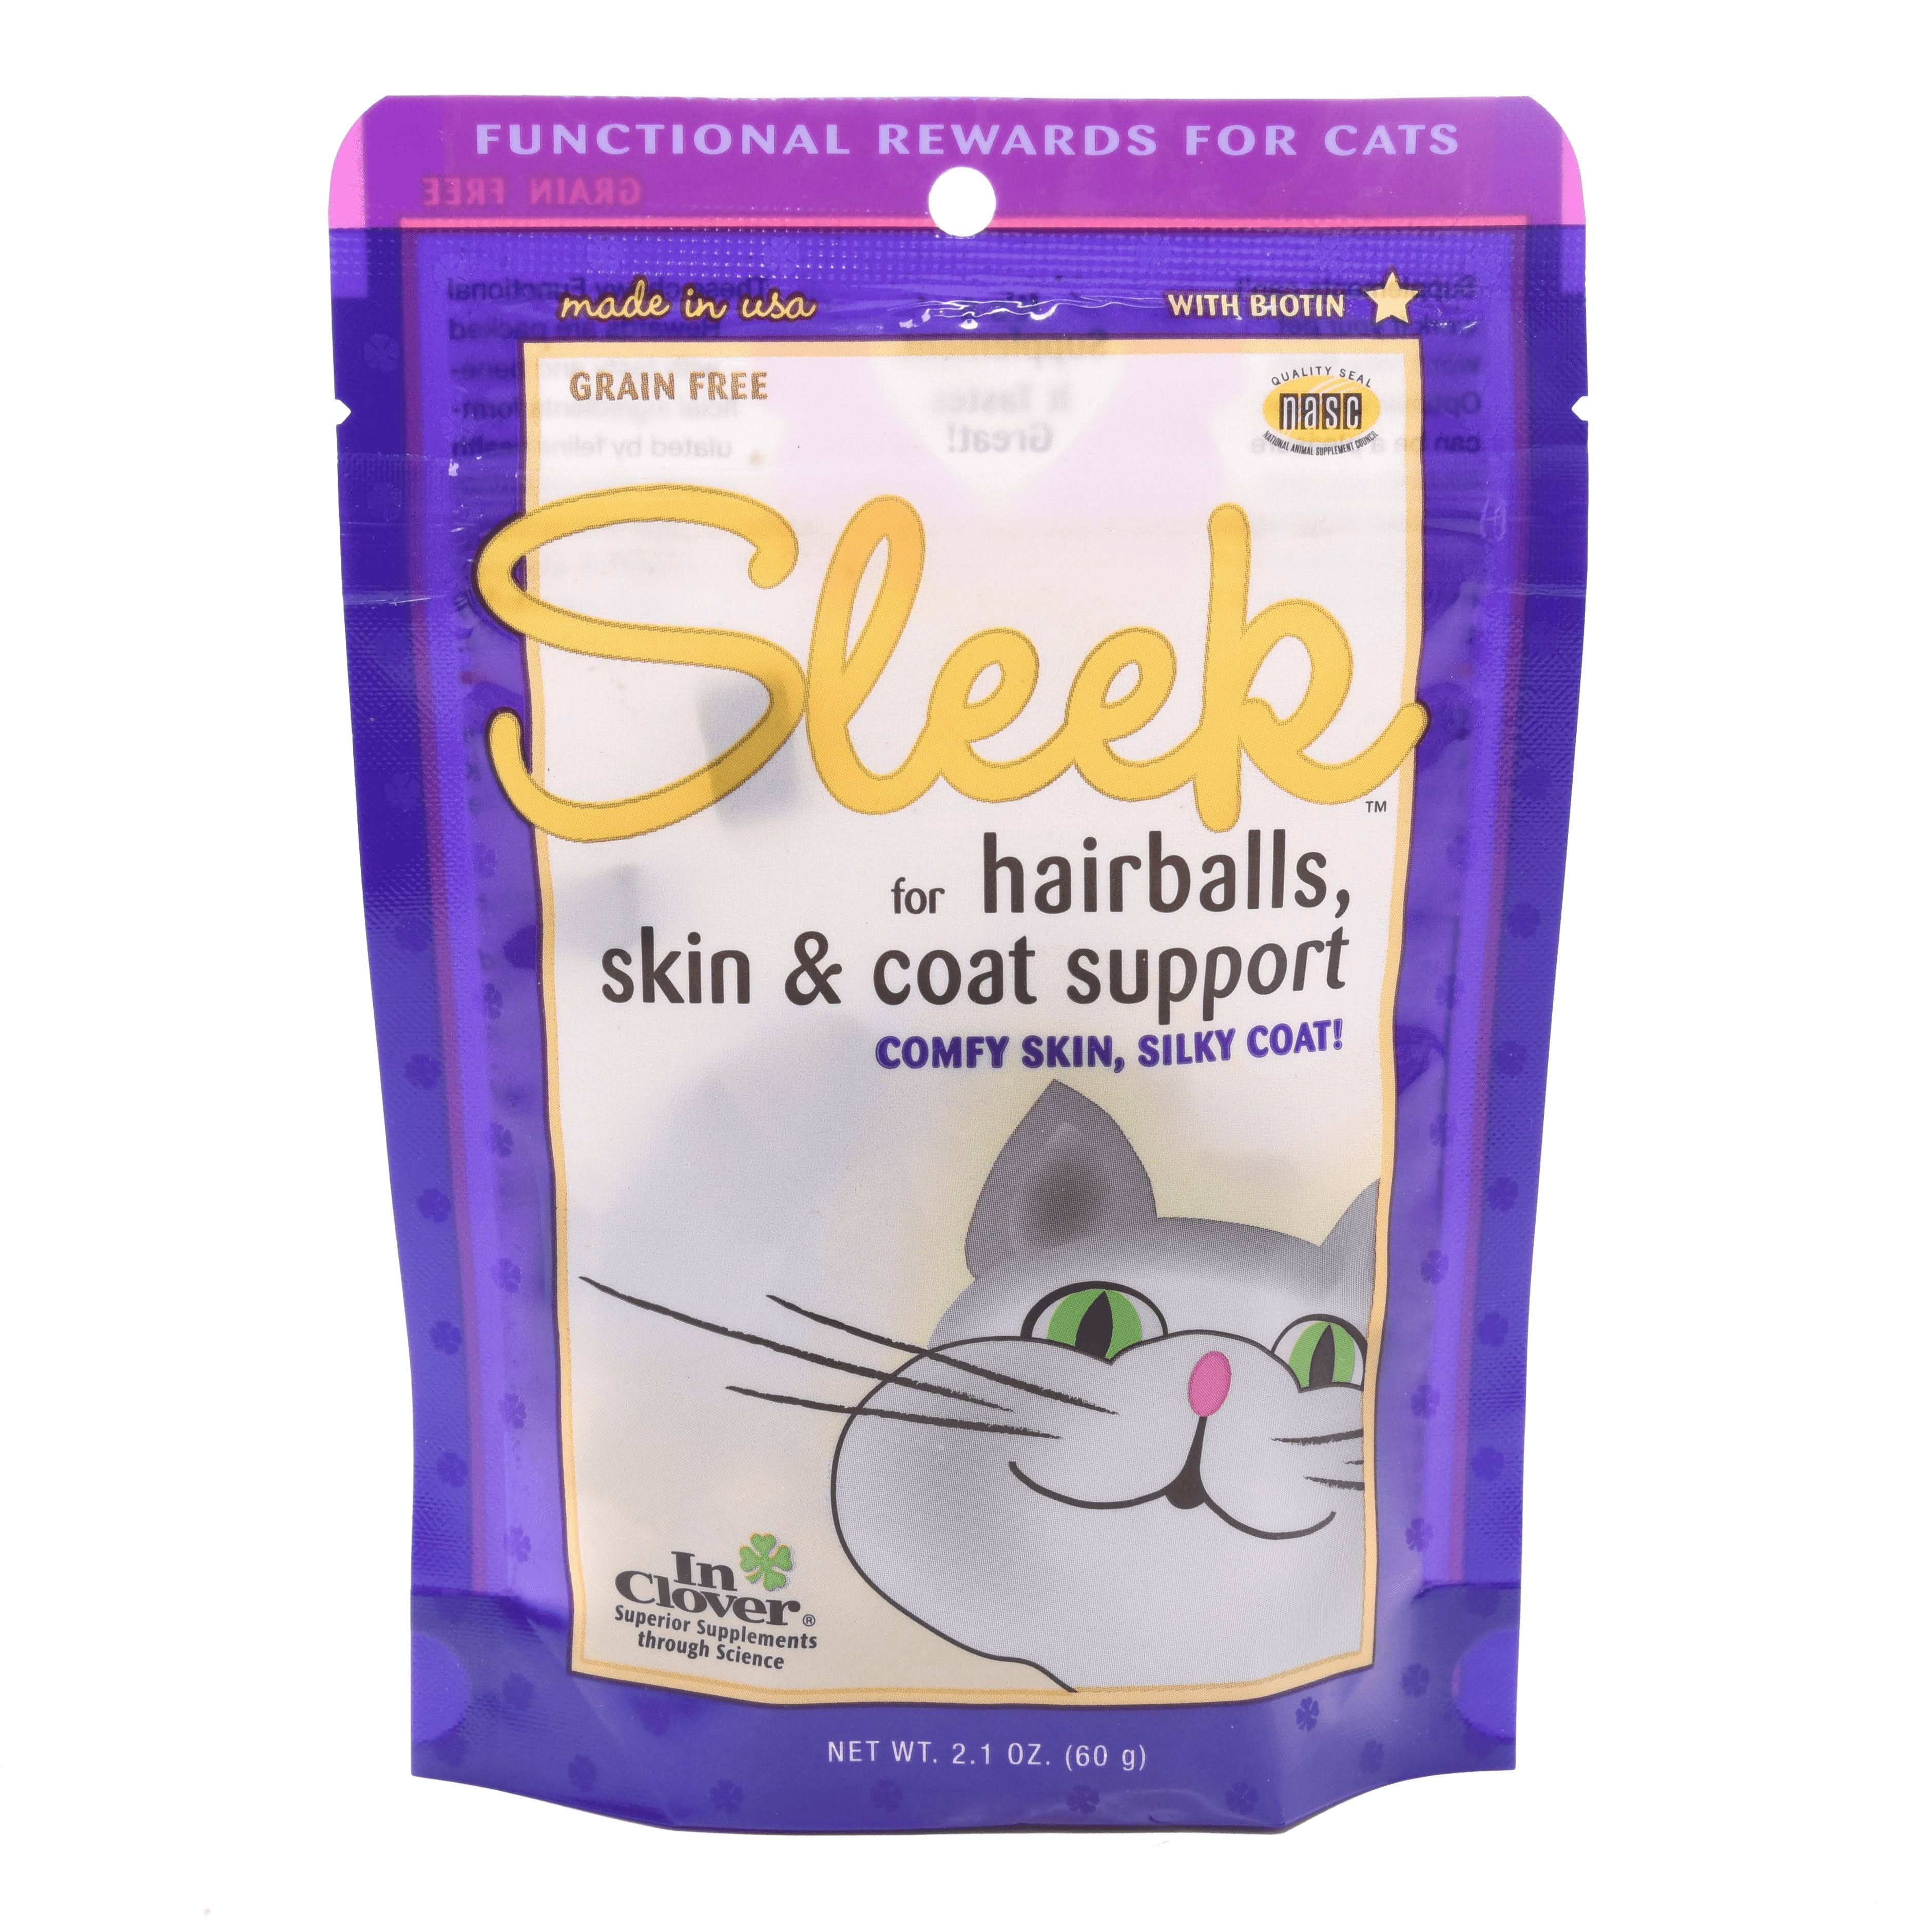 Sleek Hairballs, Skin & Coat Support Cat Chews